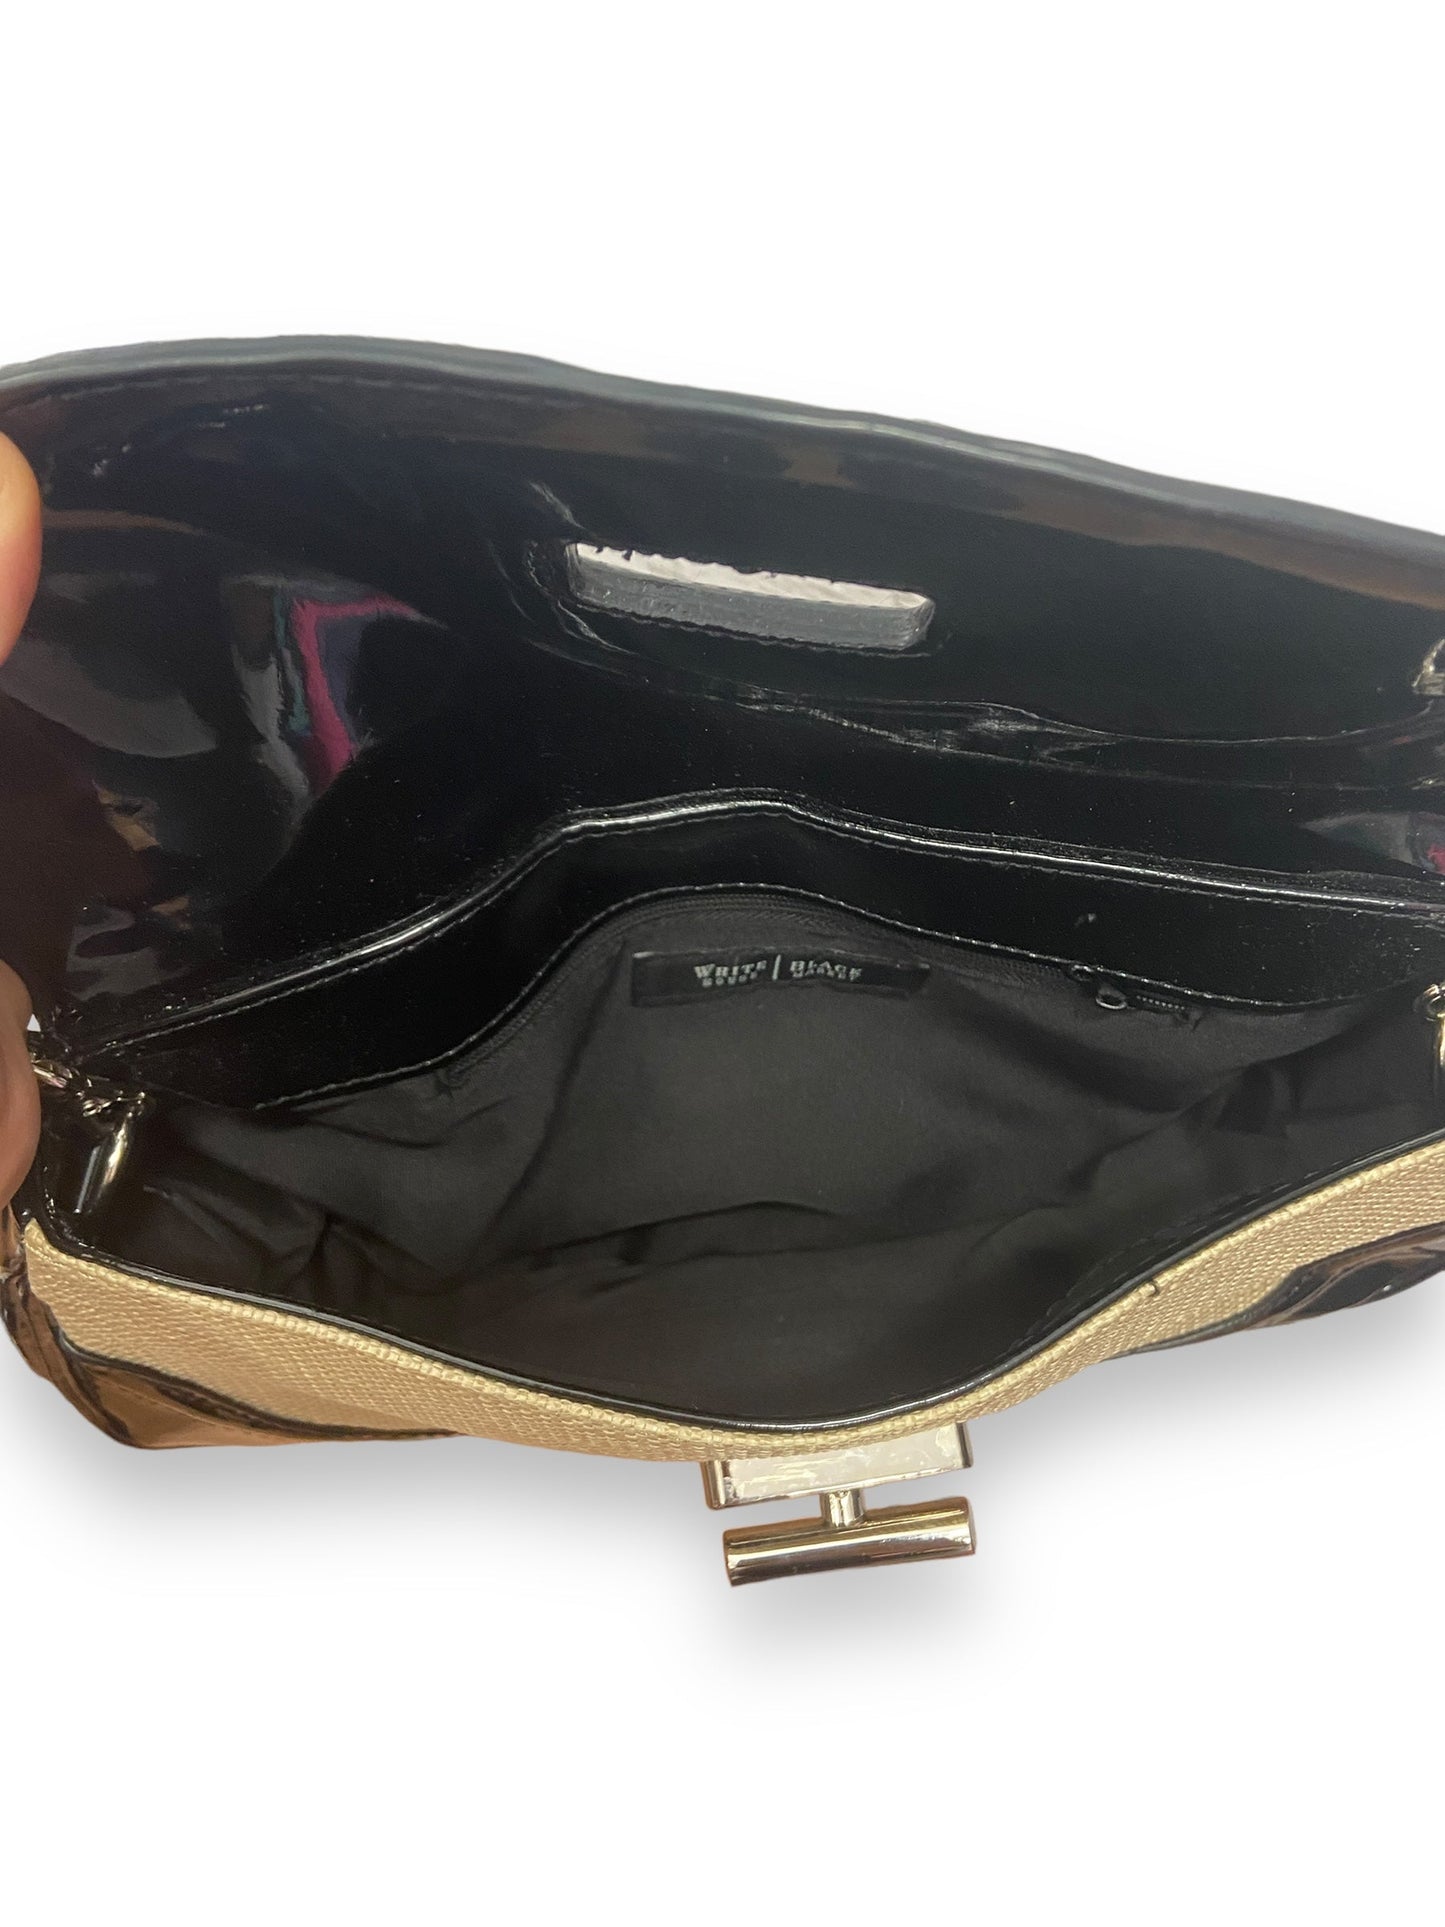 Handbag By White House Black Market  Size: Small